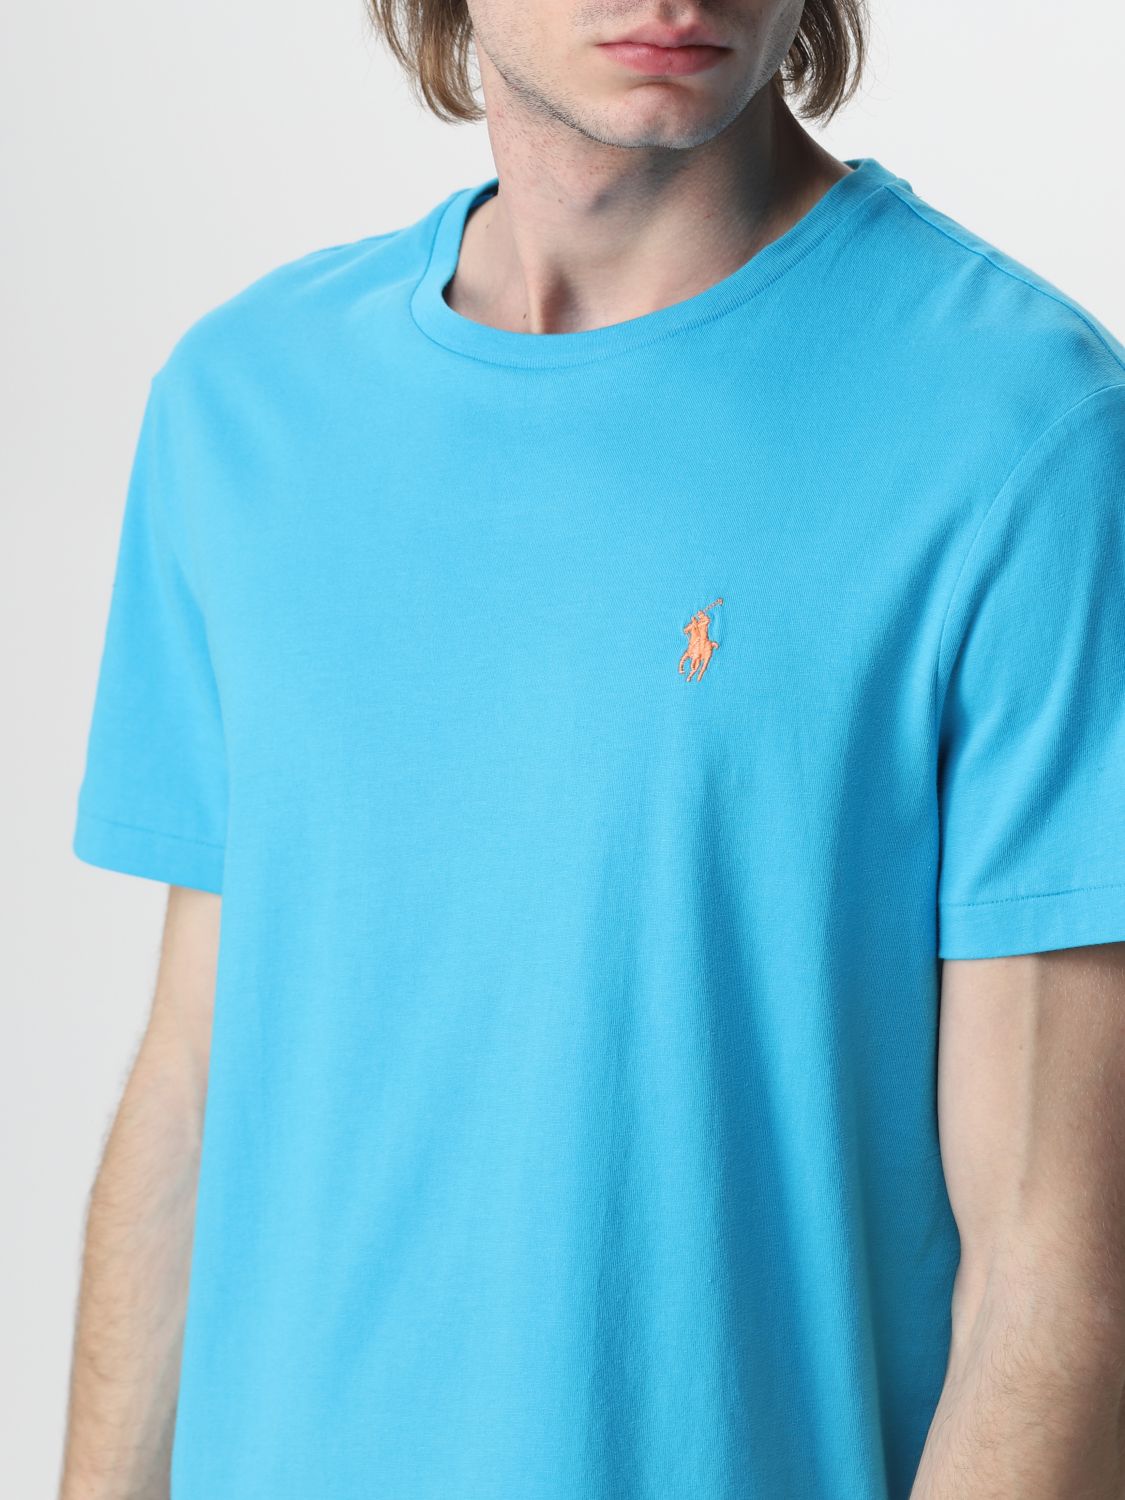 POLO RALPH LAUREN: cotton t-shirt with logo - Blue | Polo Ralph Lauren t- shirt 710671438 online on 